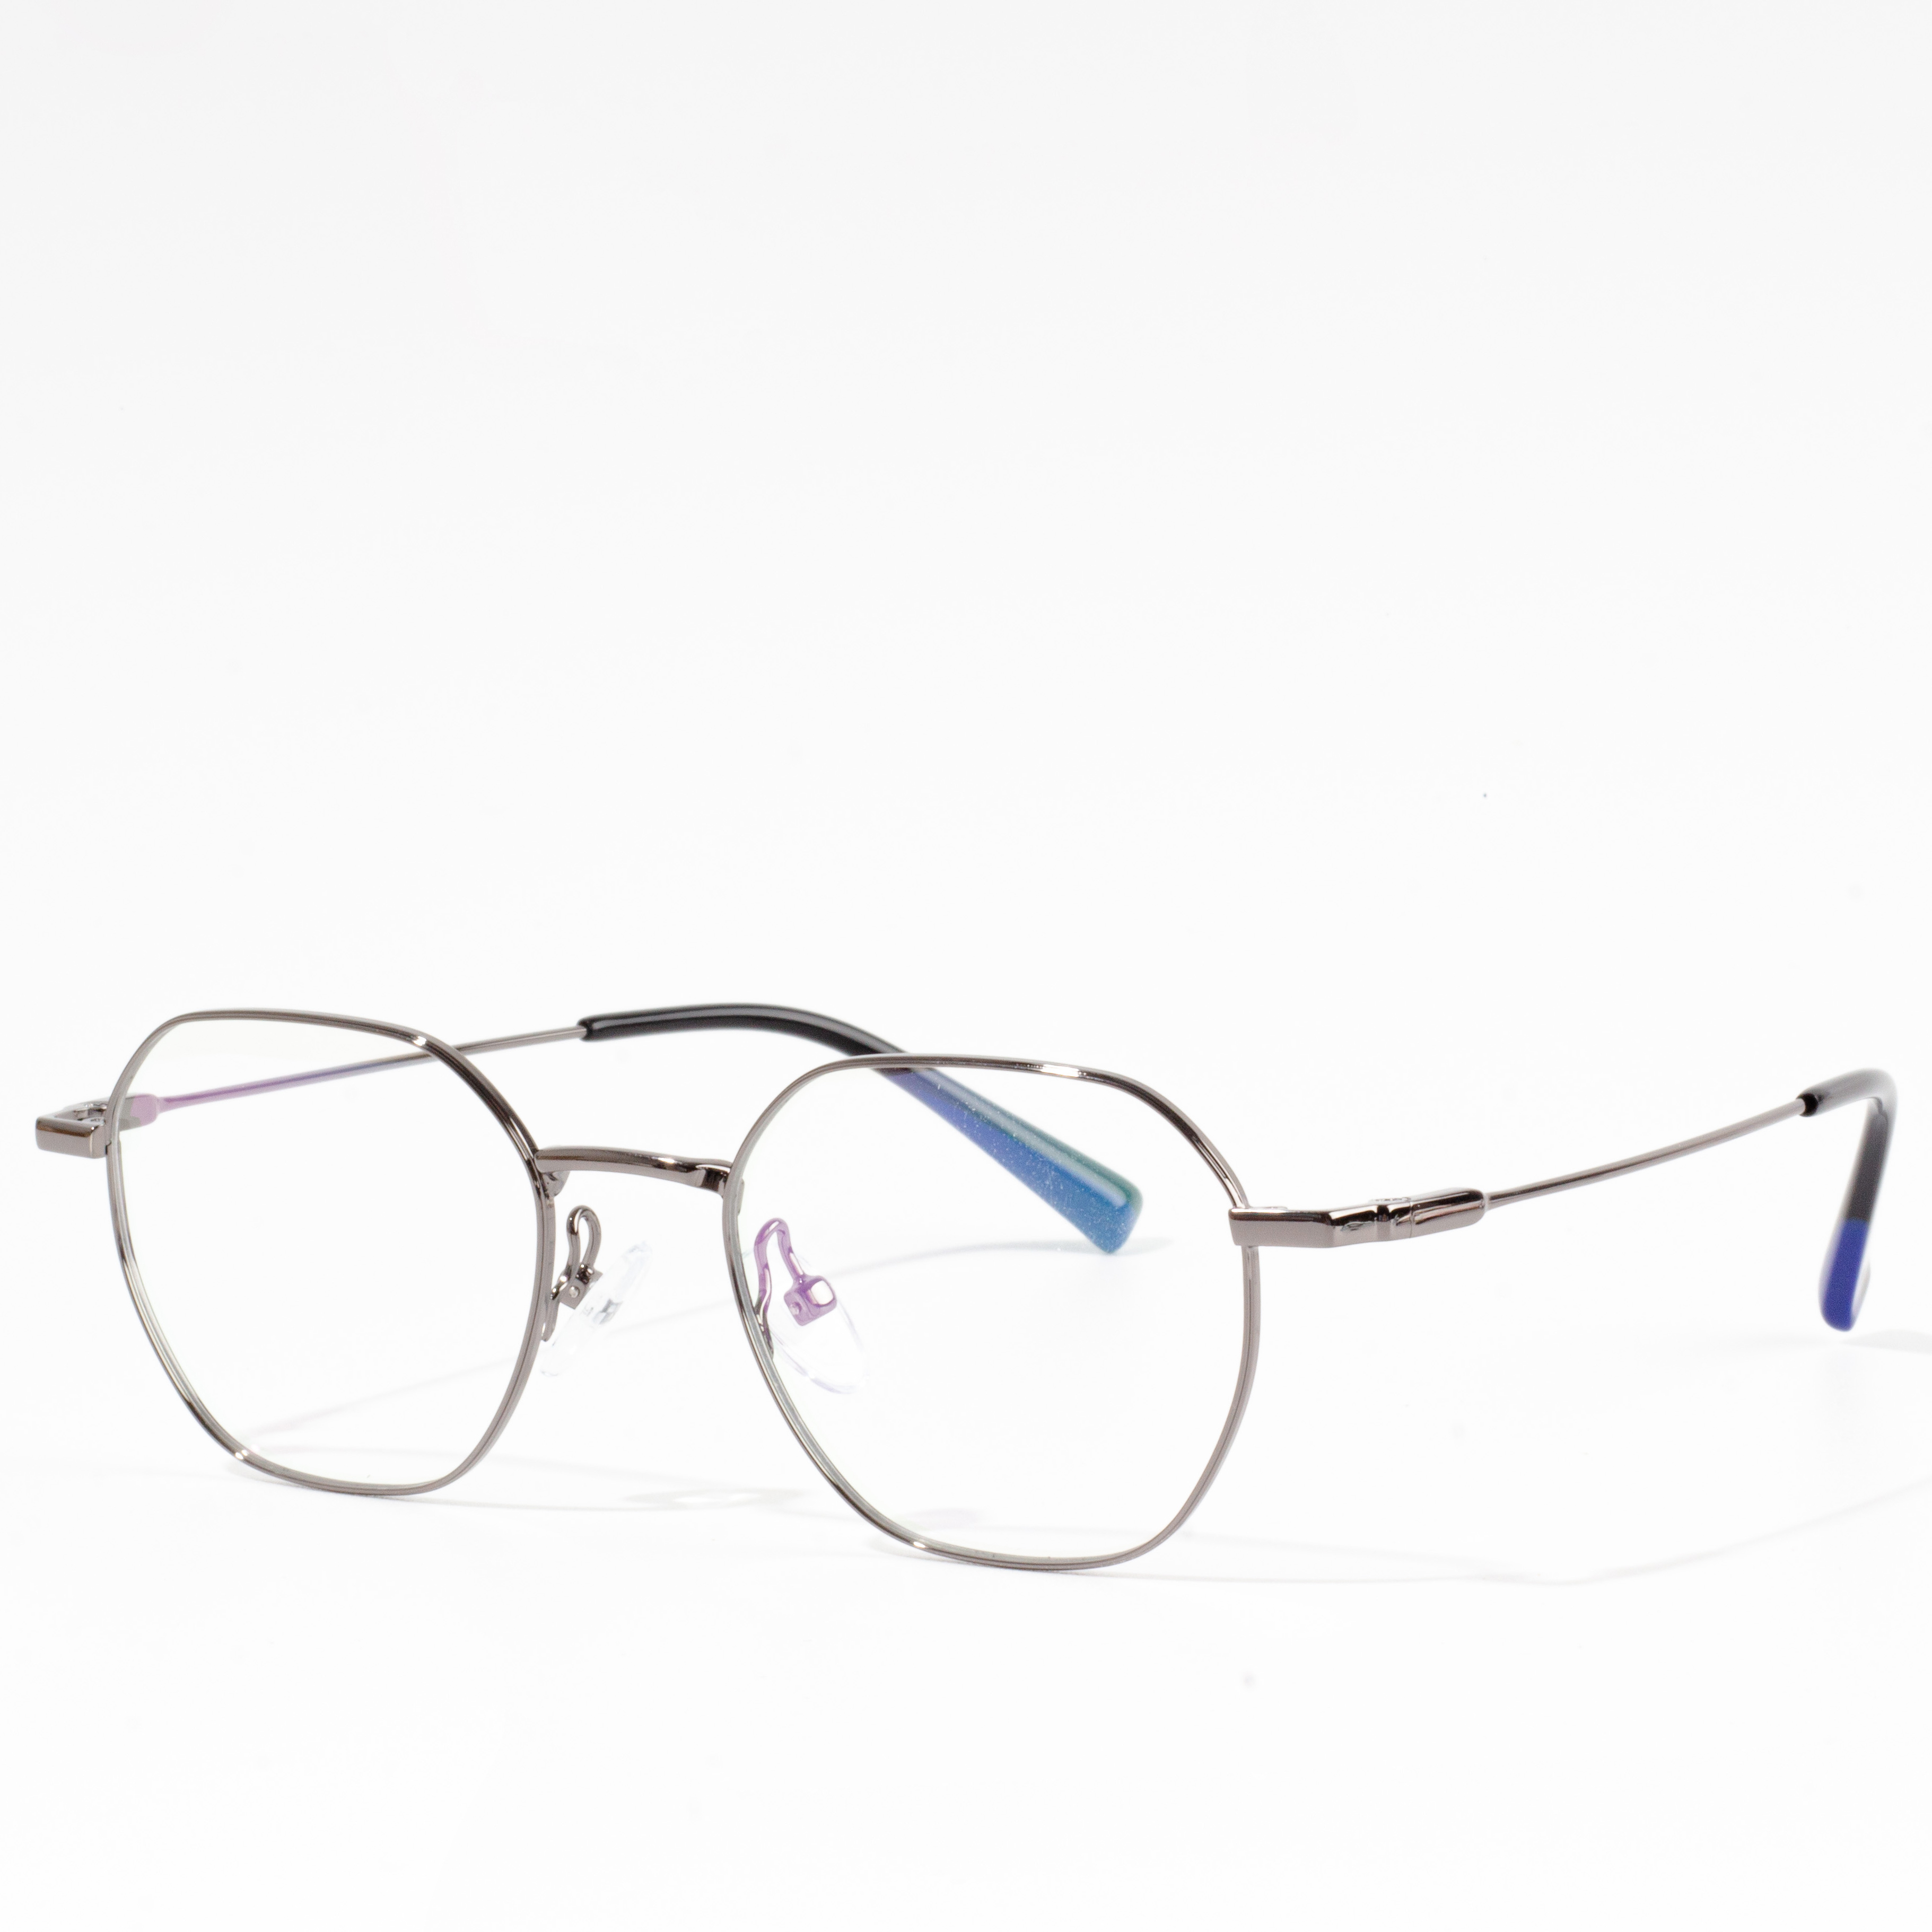 flexible metal frame eyeglasses